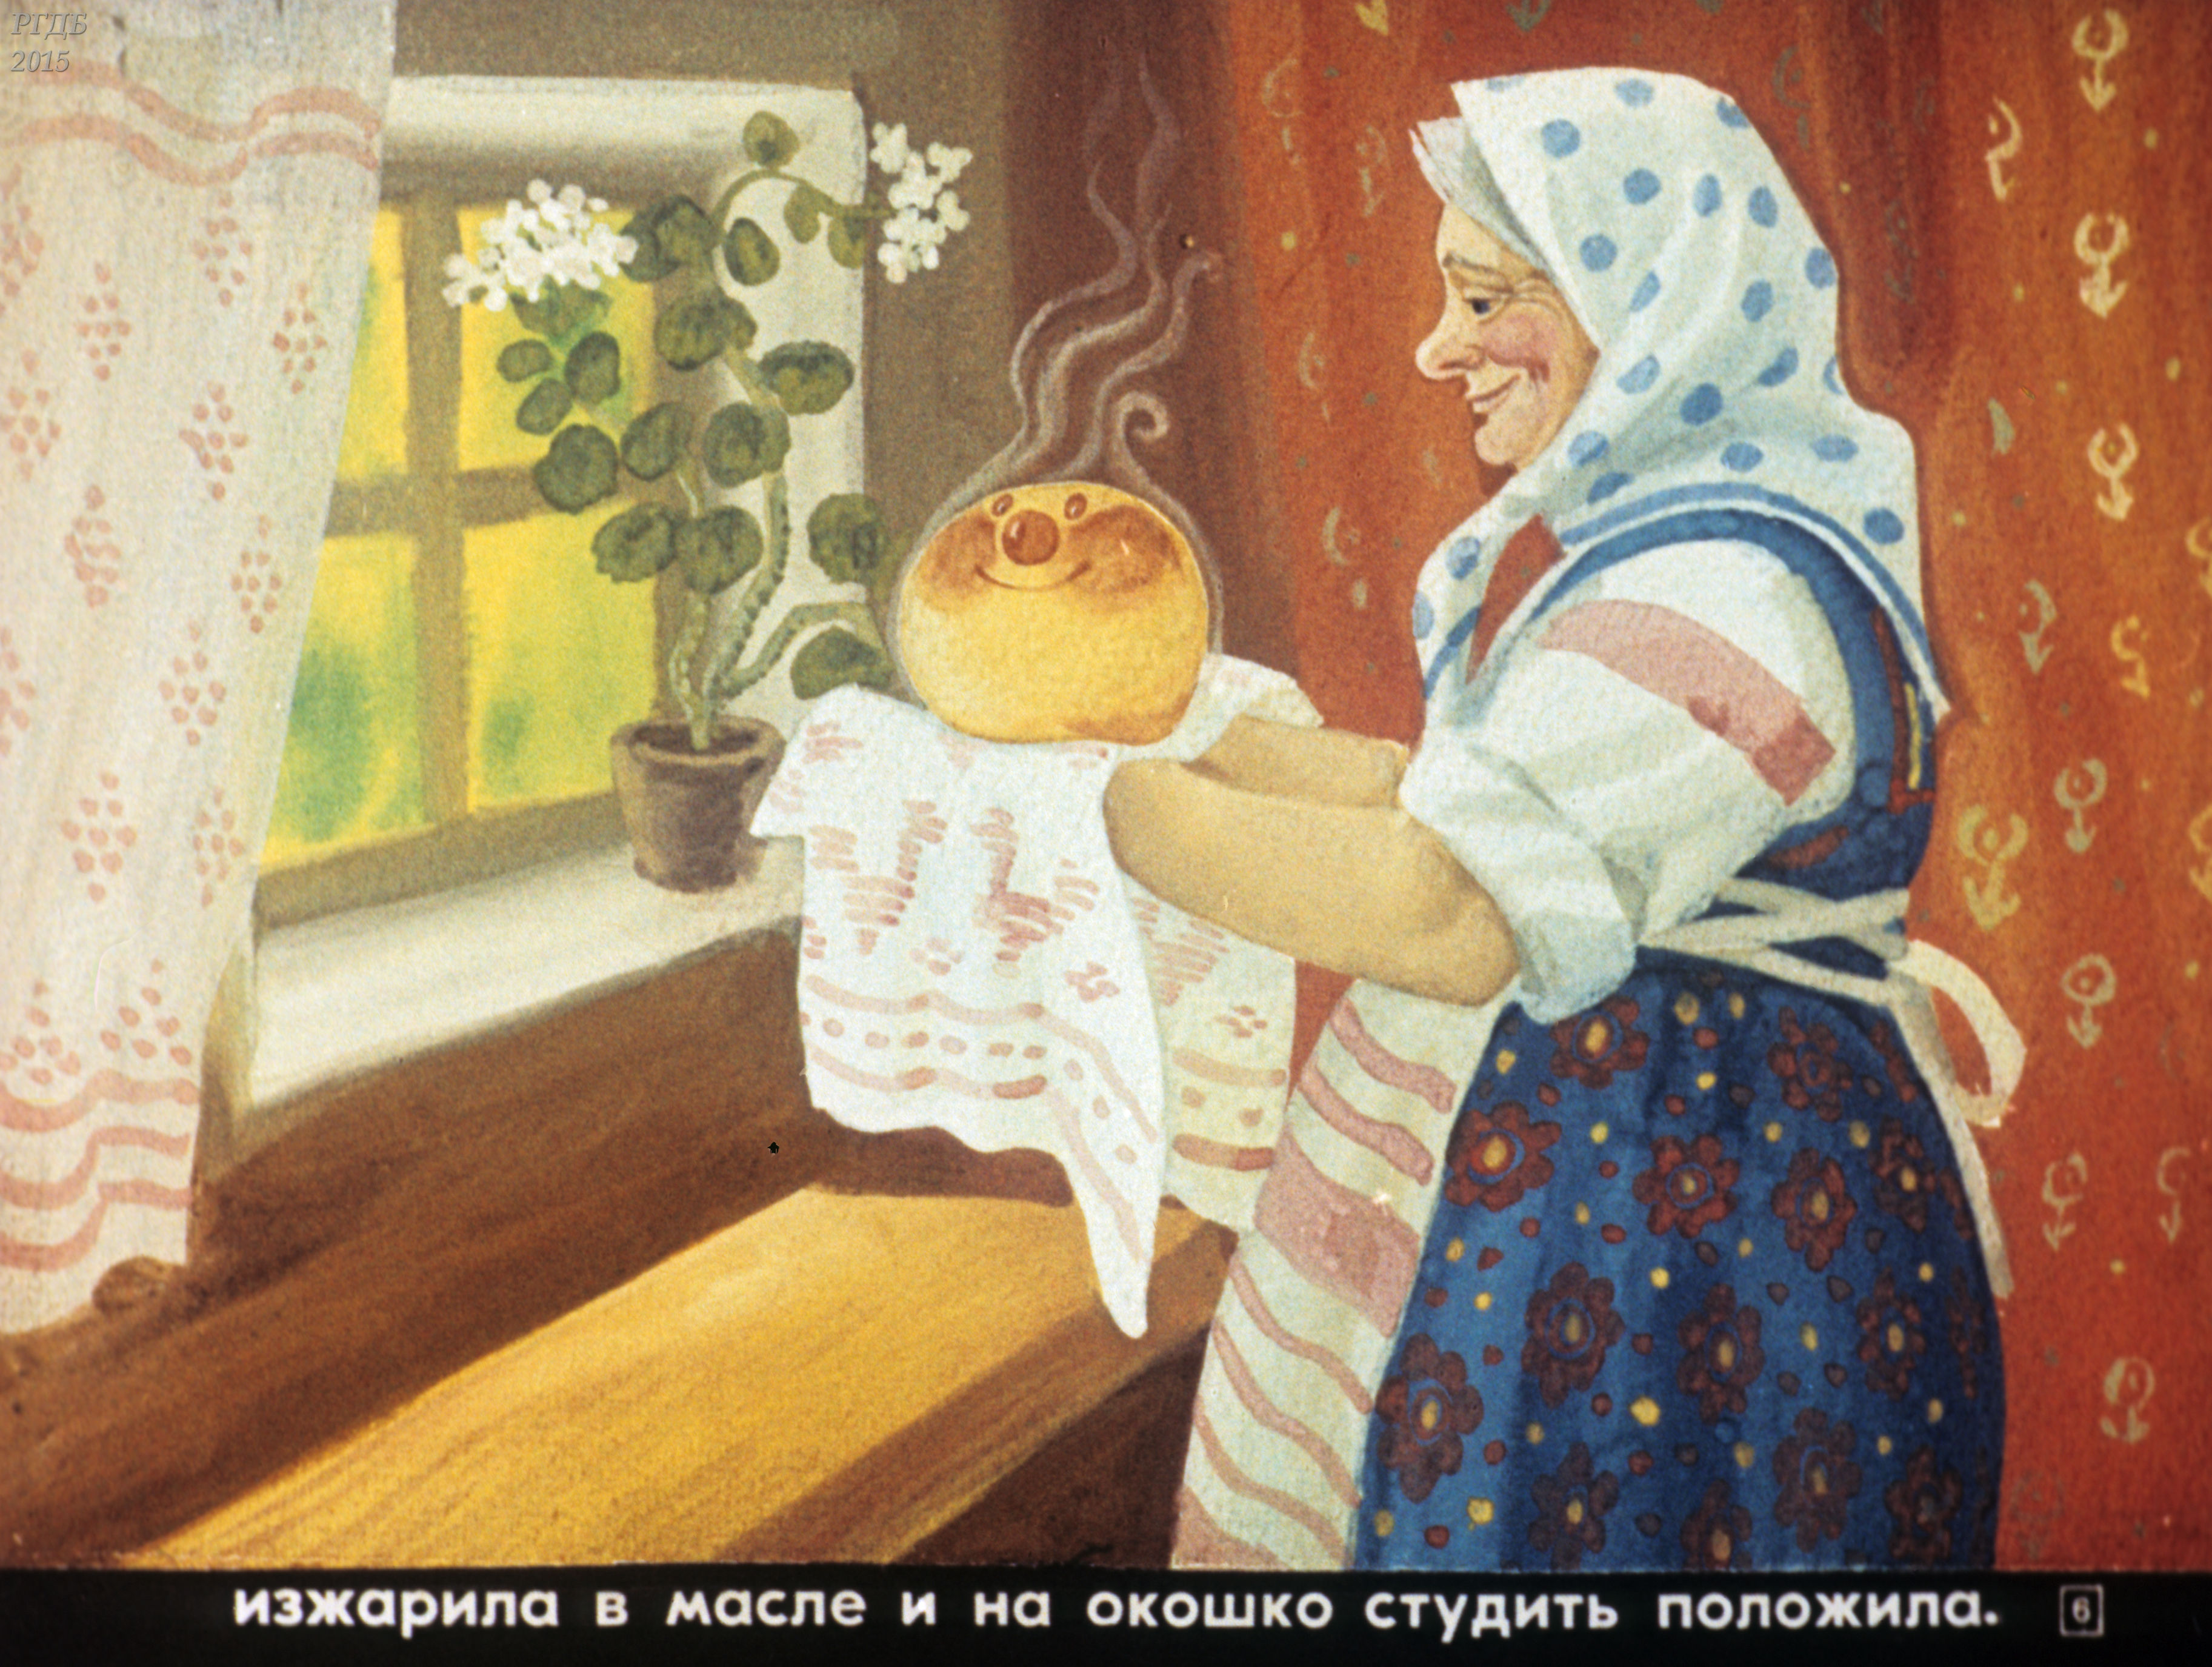 Печена бабка. Старуха печет Колобок. Иллюстрация к сказке Колобок. Бабака испеклаколобка. Бабушка печет пирожки.